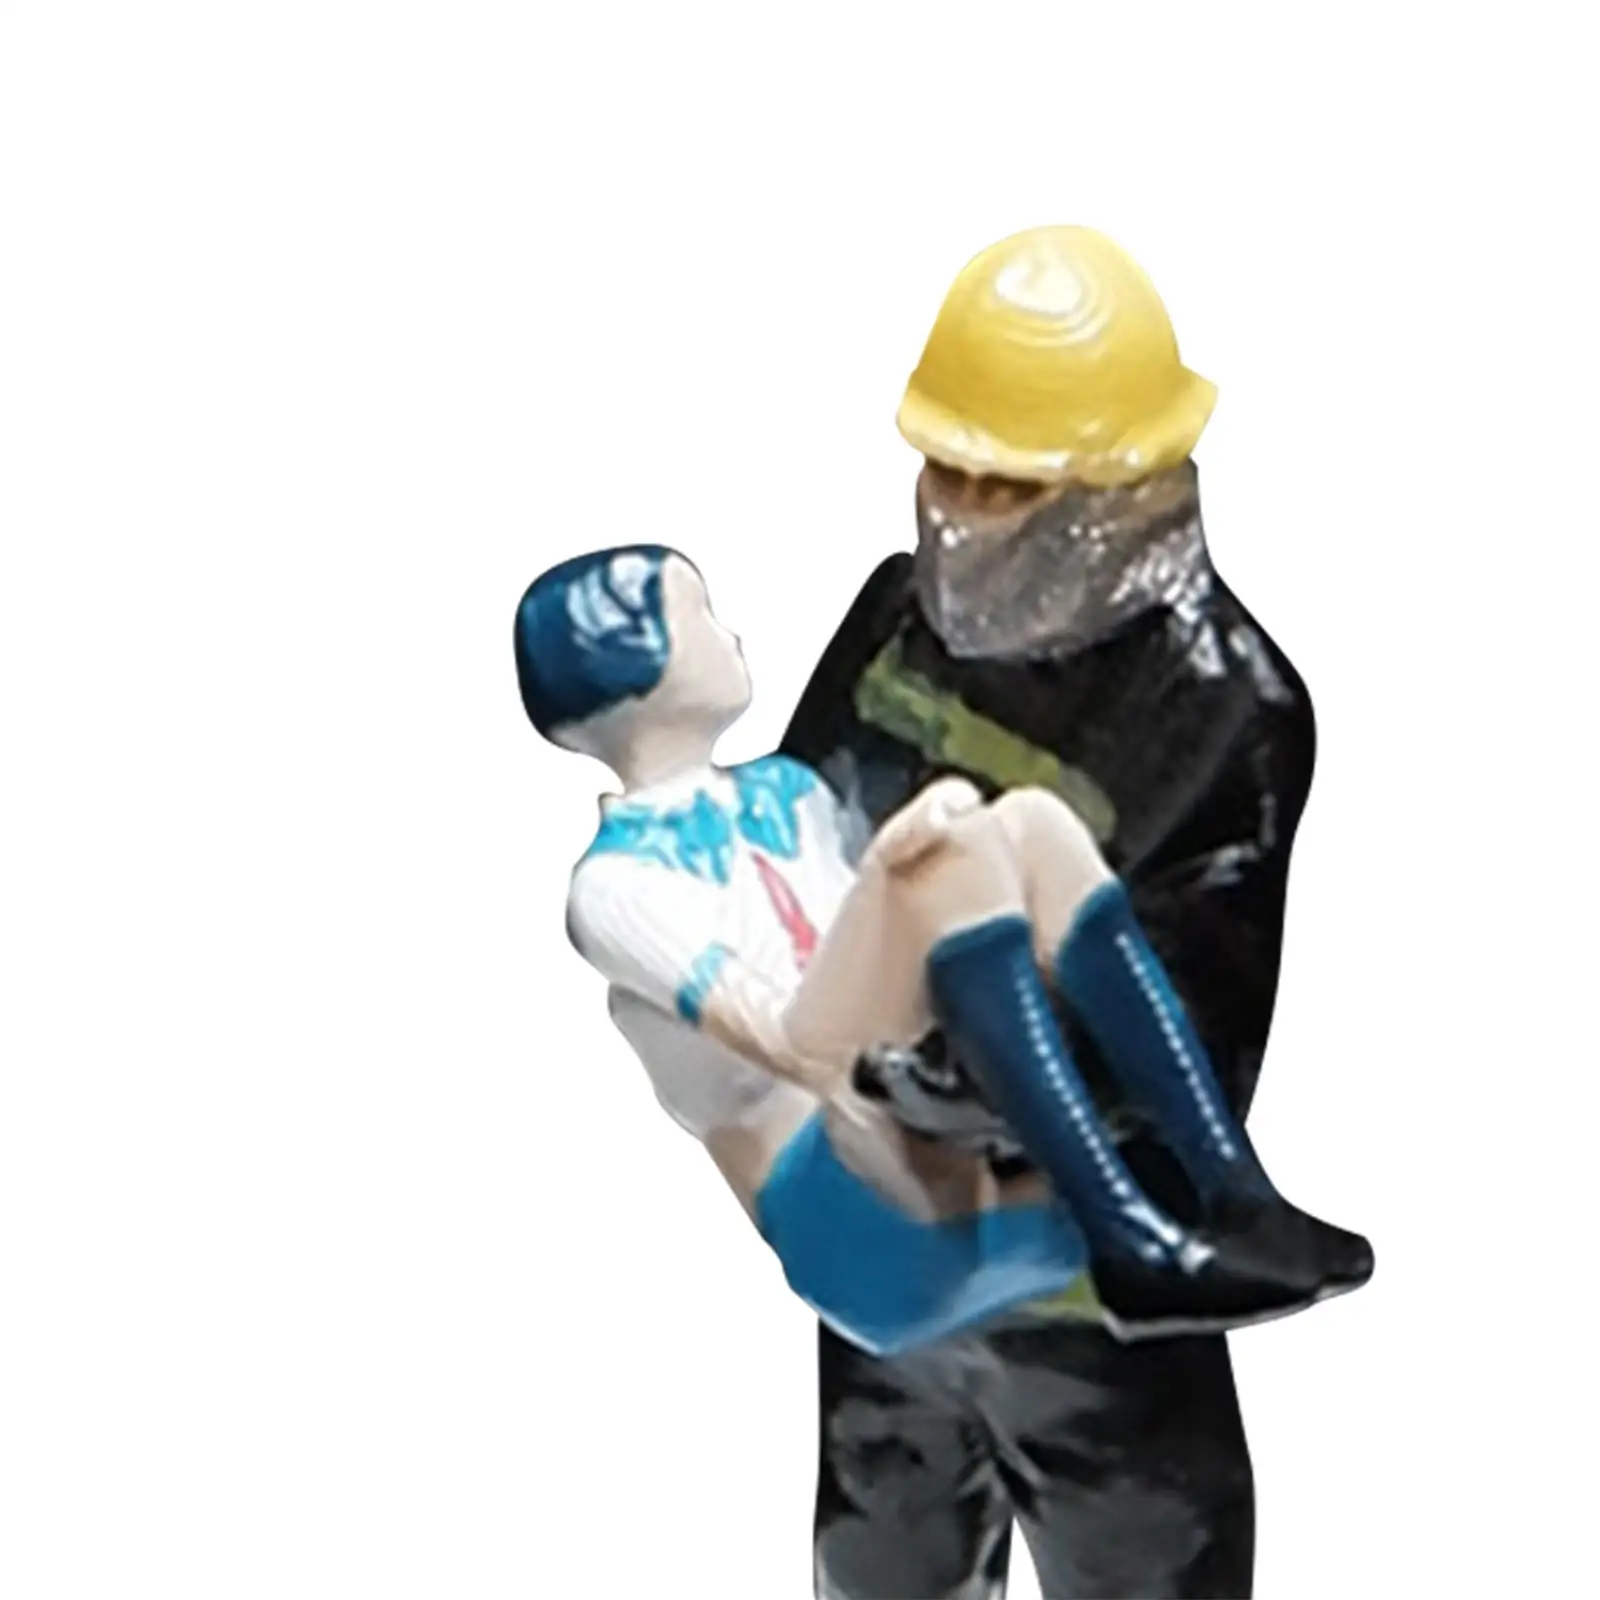 3cm People Figurines Role Play Figure Fireman Action Figure Character Model 1:64